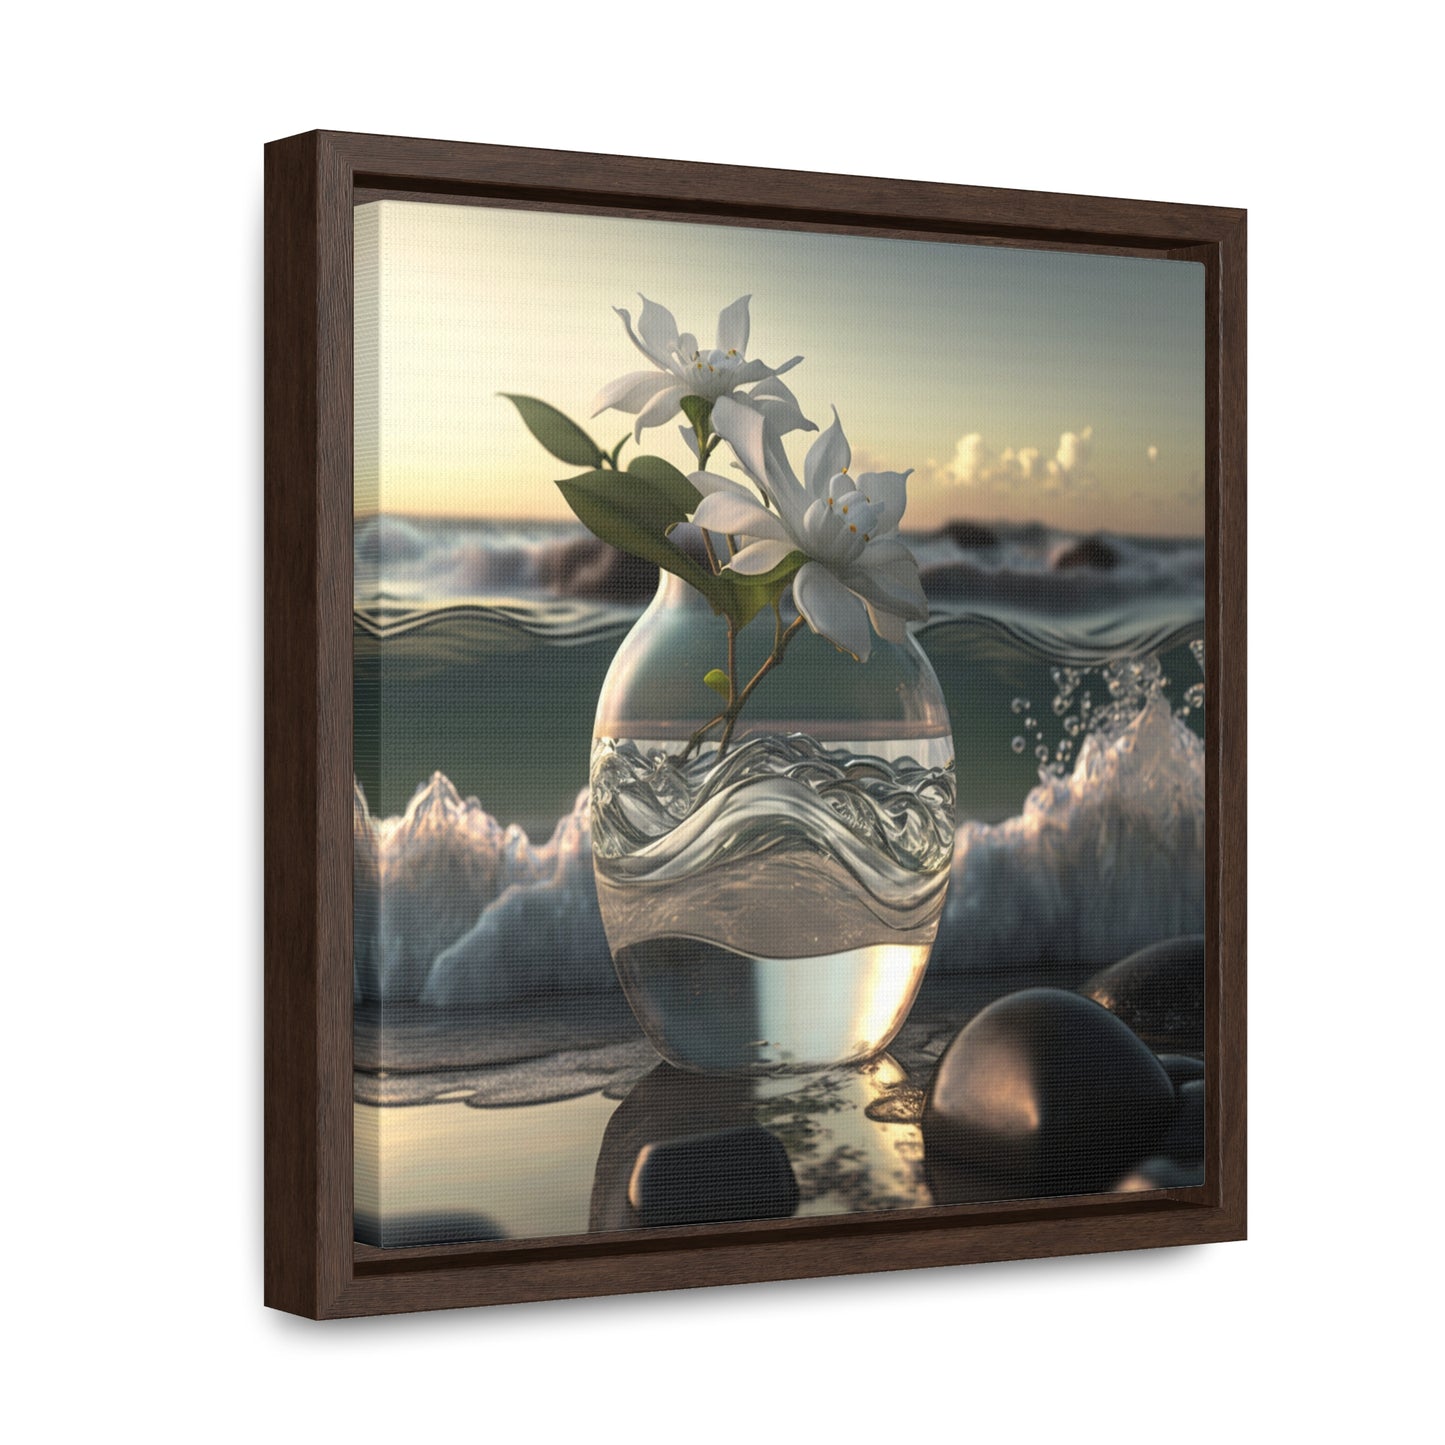 Gallery Canvas Wraps, Square Frame Jasmine glass vase 2